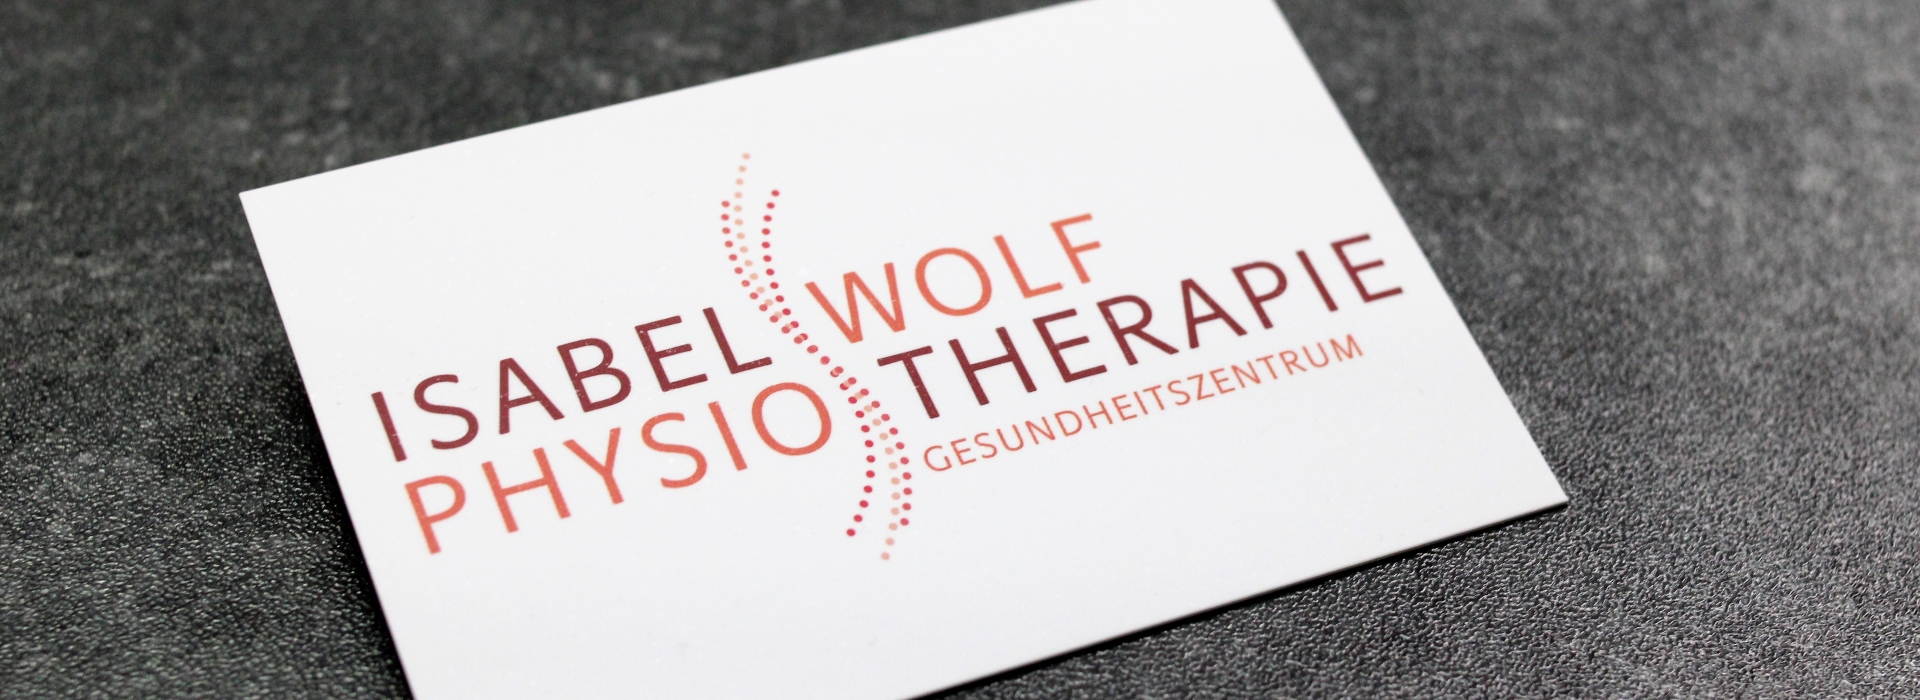 Physiotherapie Isabel Wolf Ludwigsfelde